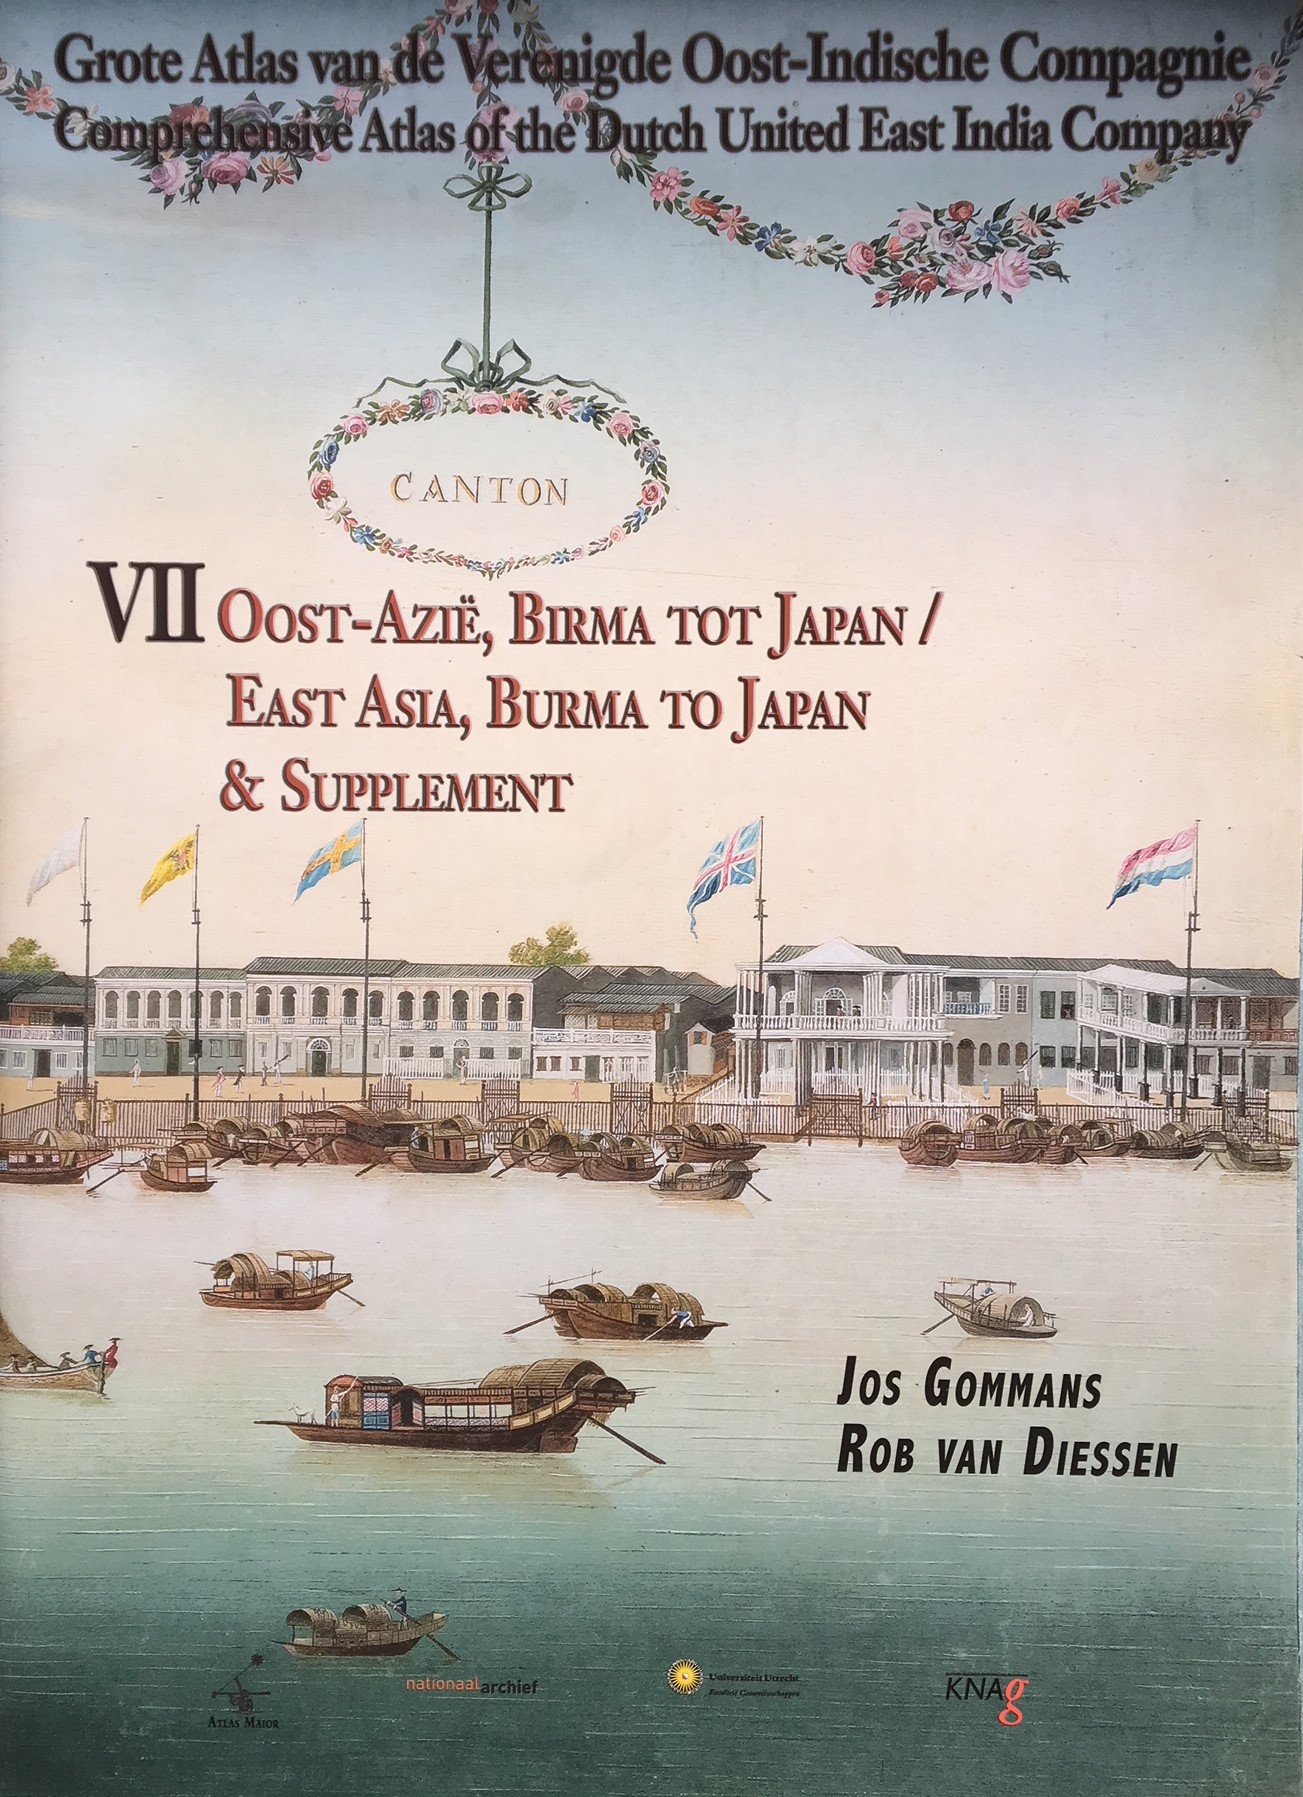 Diessen, J.R. (ed.) - Comprehensive Atlas of the Dutch United East India Company. Vol. VII: East Asia, Burma to Japan & Supplement.